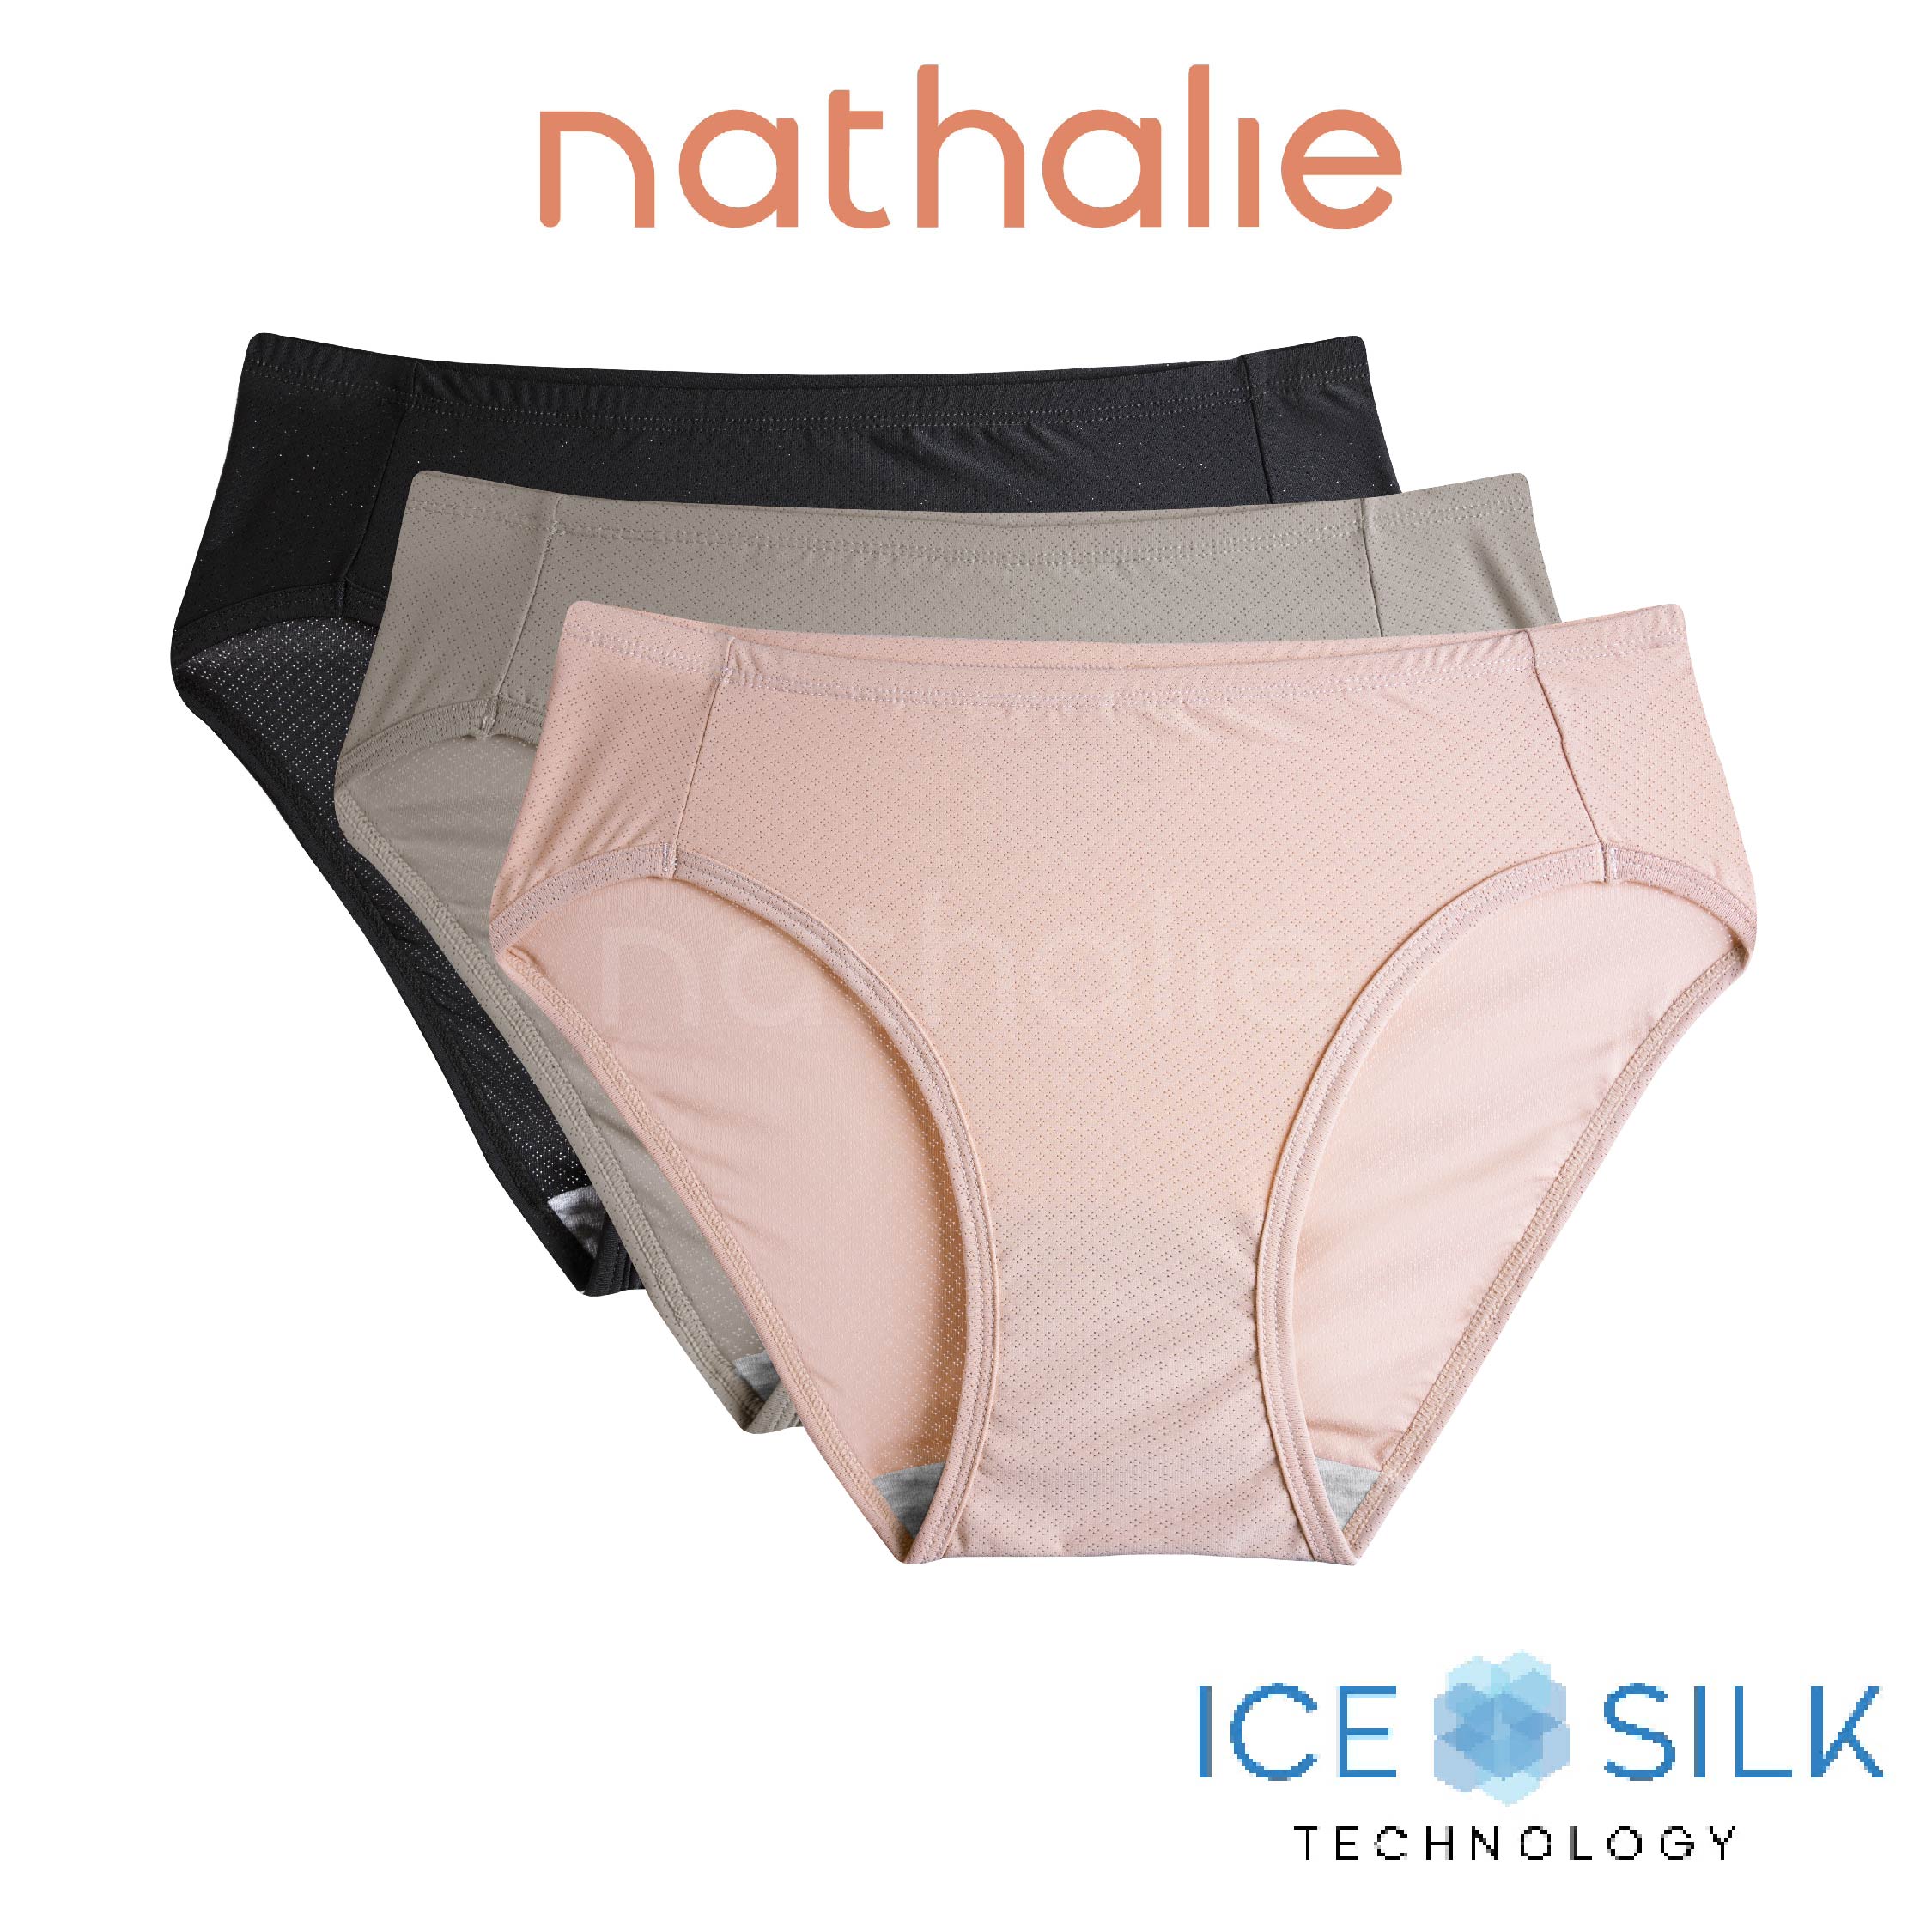 Nathalie Celana Dalam Wanita High Cut Ice Silk Panty CD Cewek Clana Dalem Quick Dry Panties 3 pcs NTC 3486